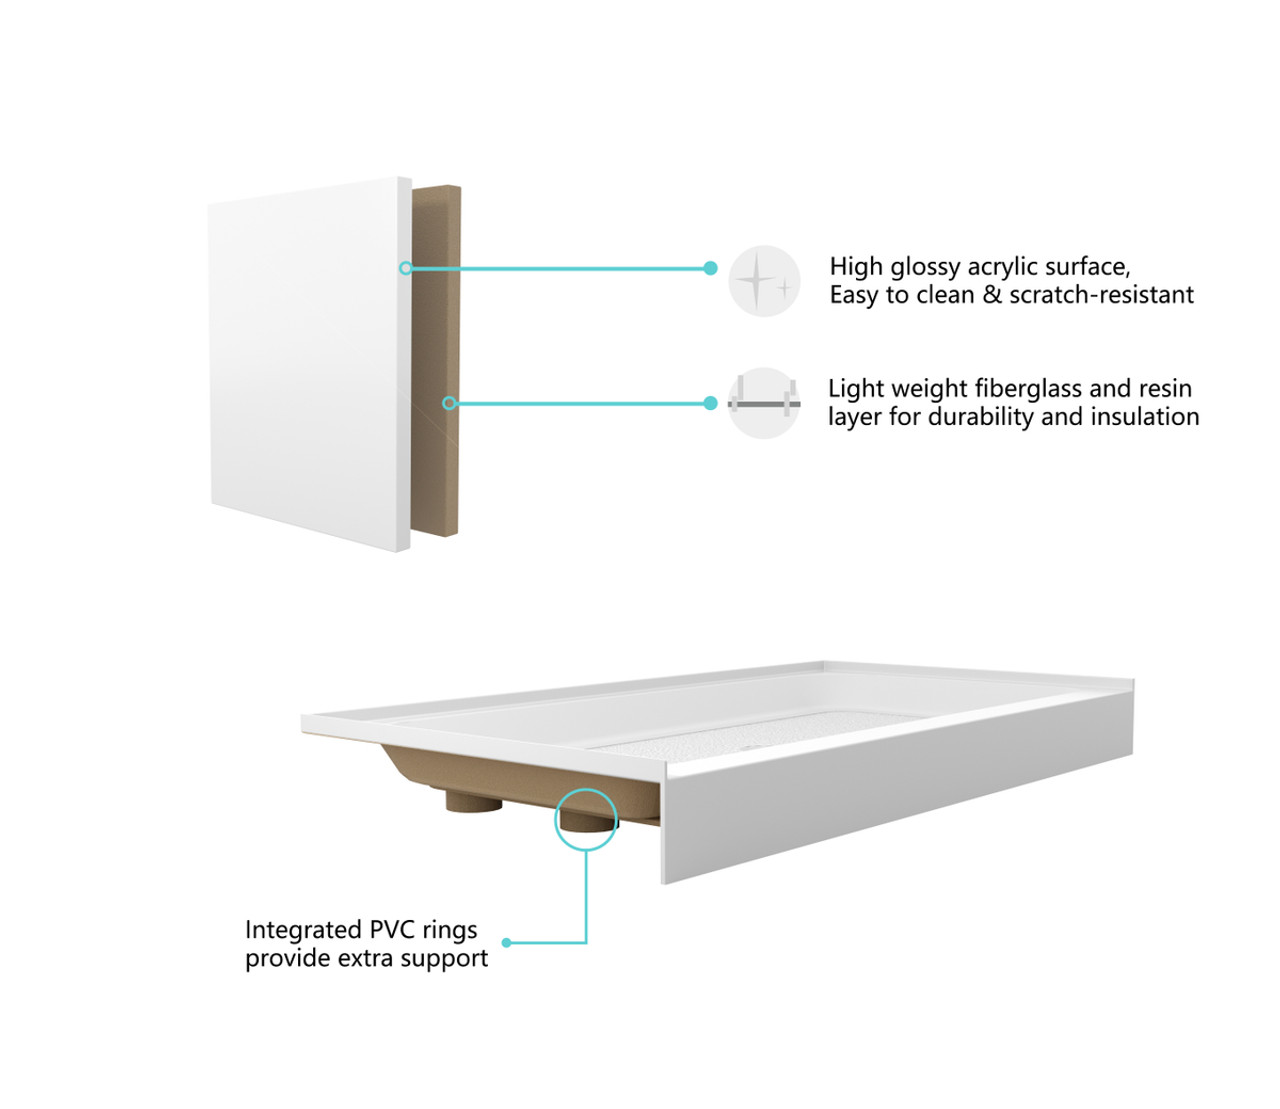 Elegant Kitchen and Bath STY01-L6032 60x32 inch Single threshold shower tray left drain in glossy white